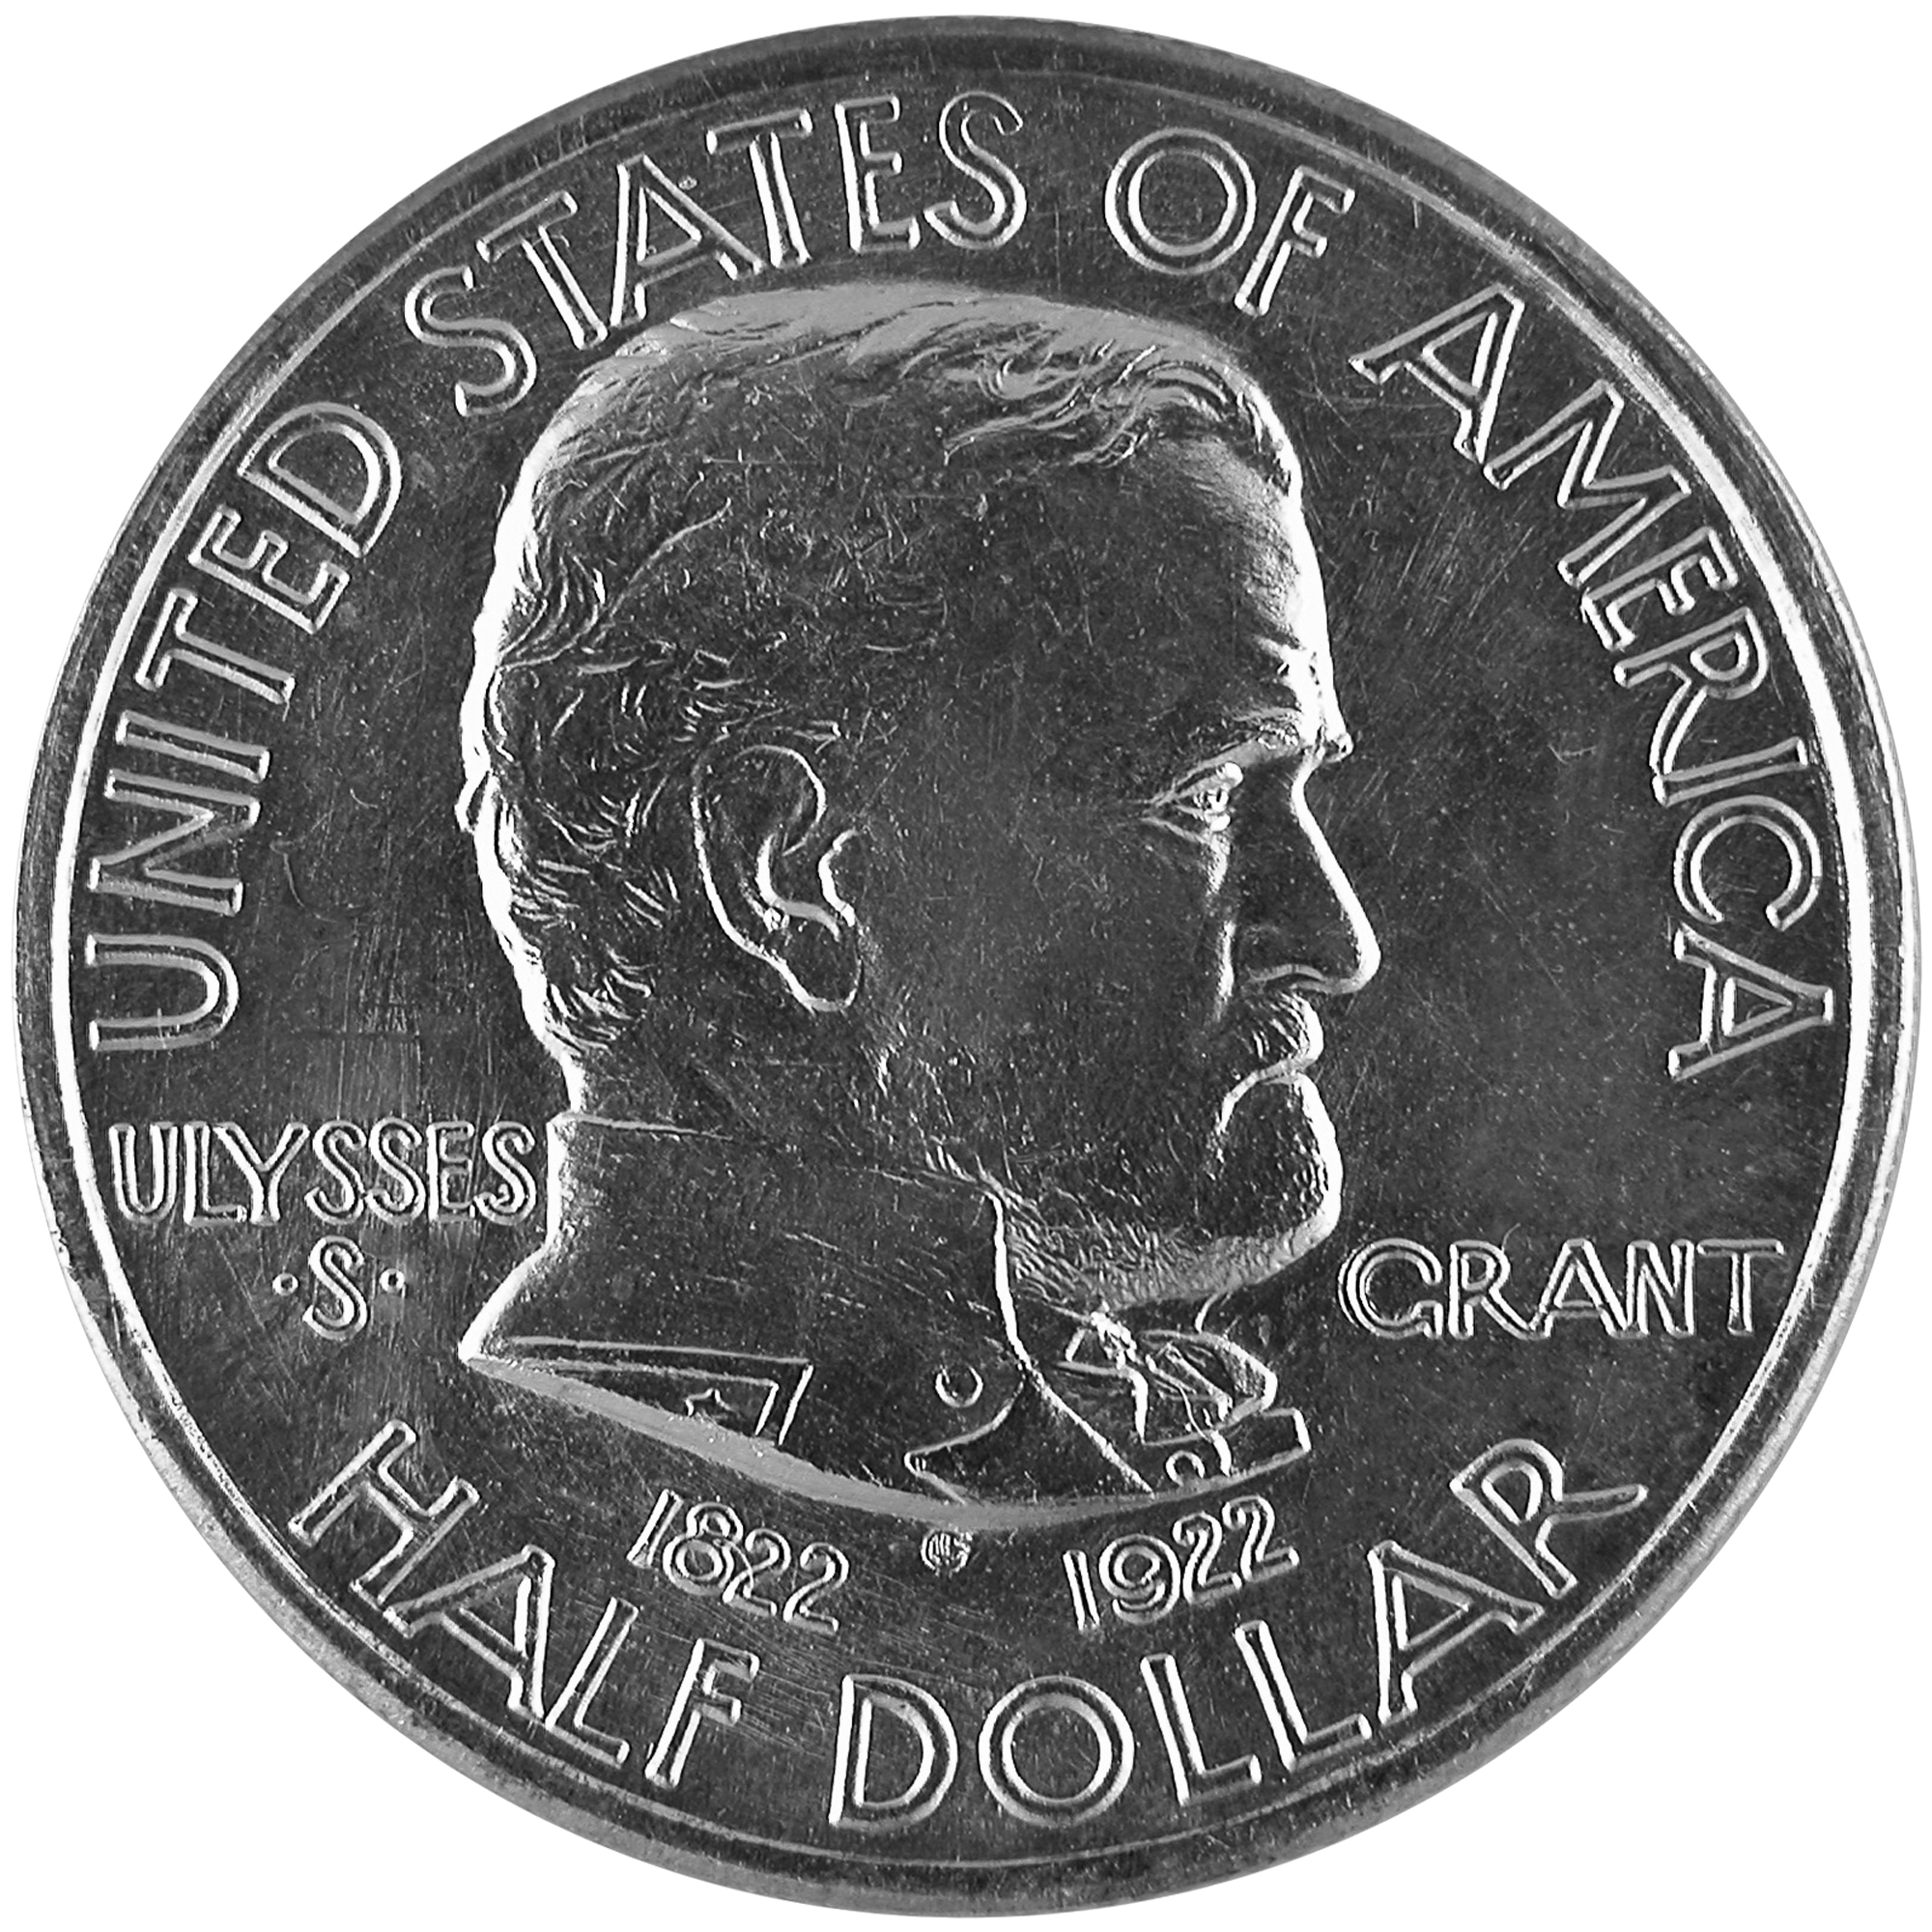 1922 Ulysses S. Grant Memorial Commemorative Silver Half Dollar Coin Obverse